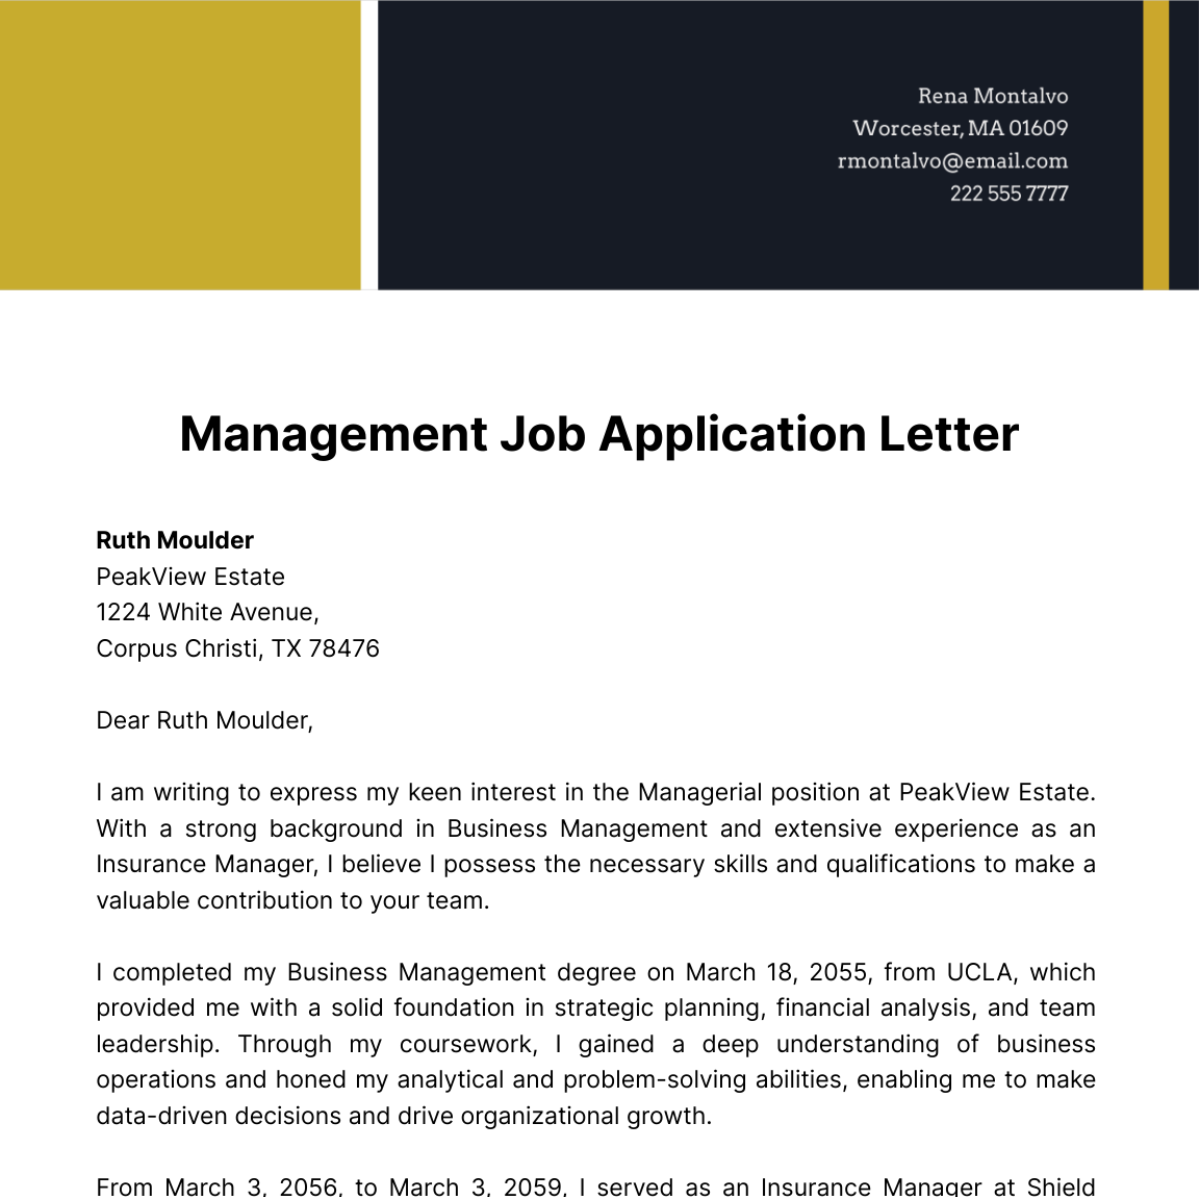 Management Job Application Letter  Template